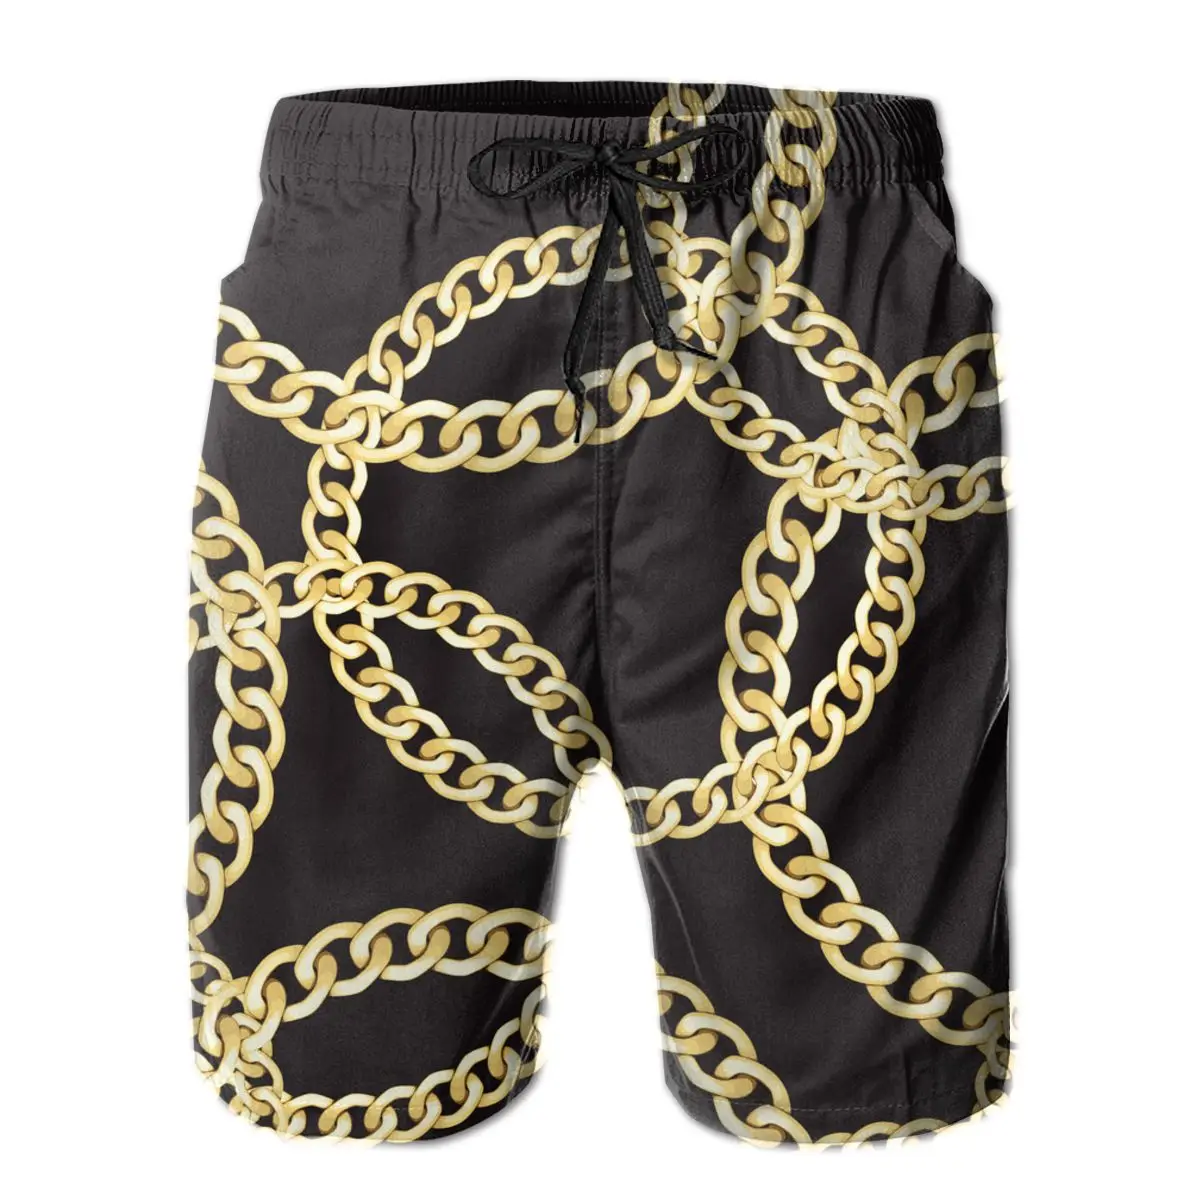 3d Gold Chain Men's beach shorts Quick dry travel swimsuit swimming trunks surf pants slacks mountain sports pants gym